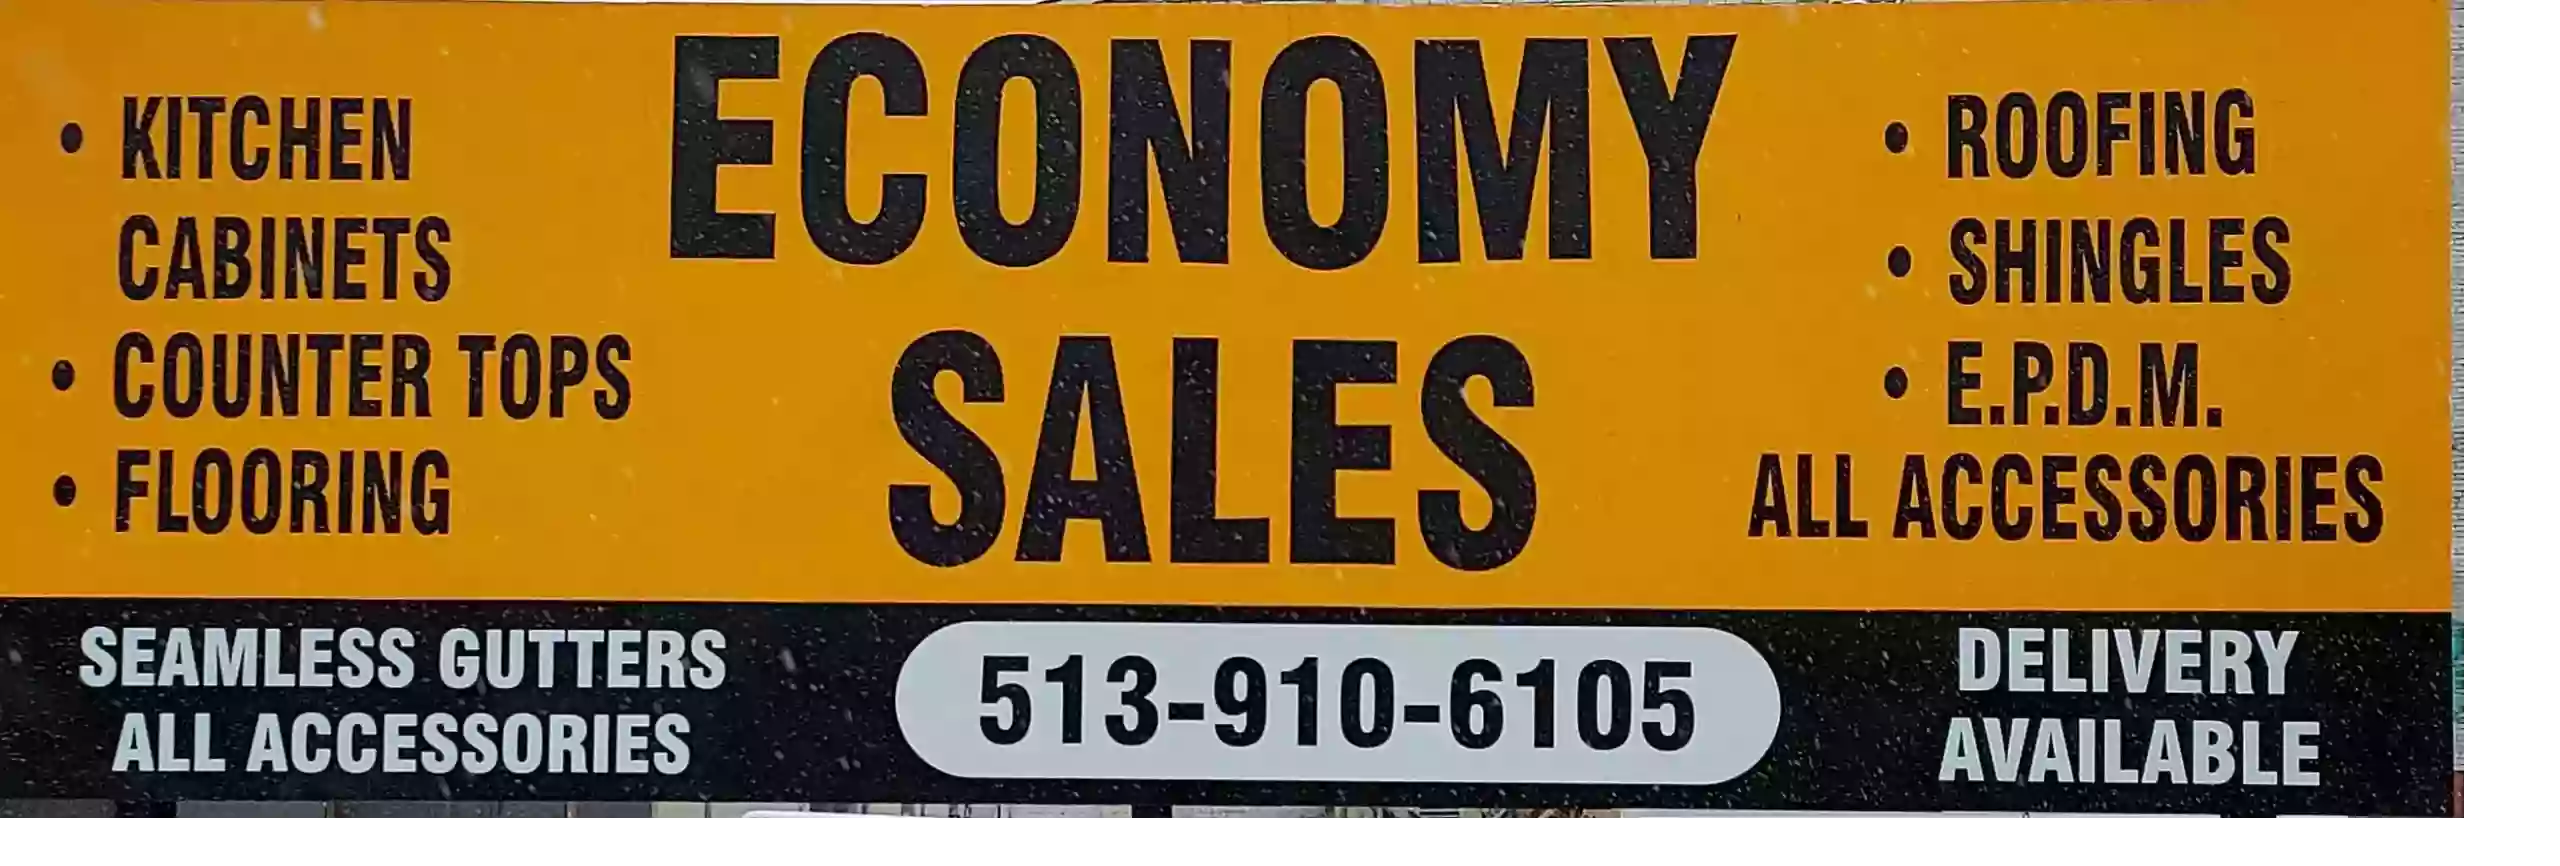 Economy Shingle Sales